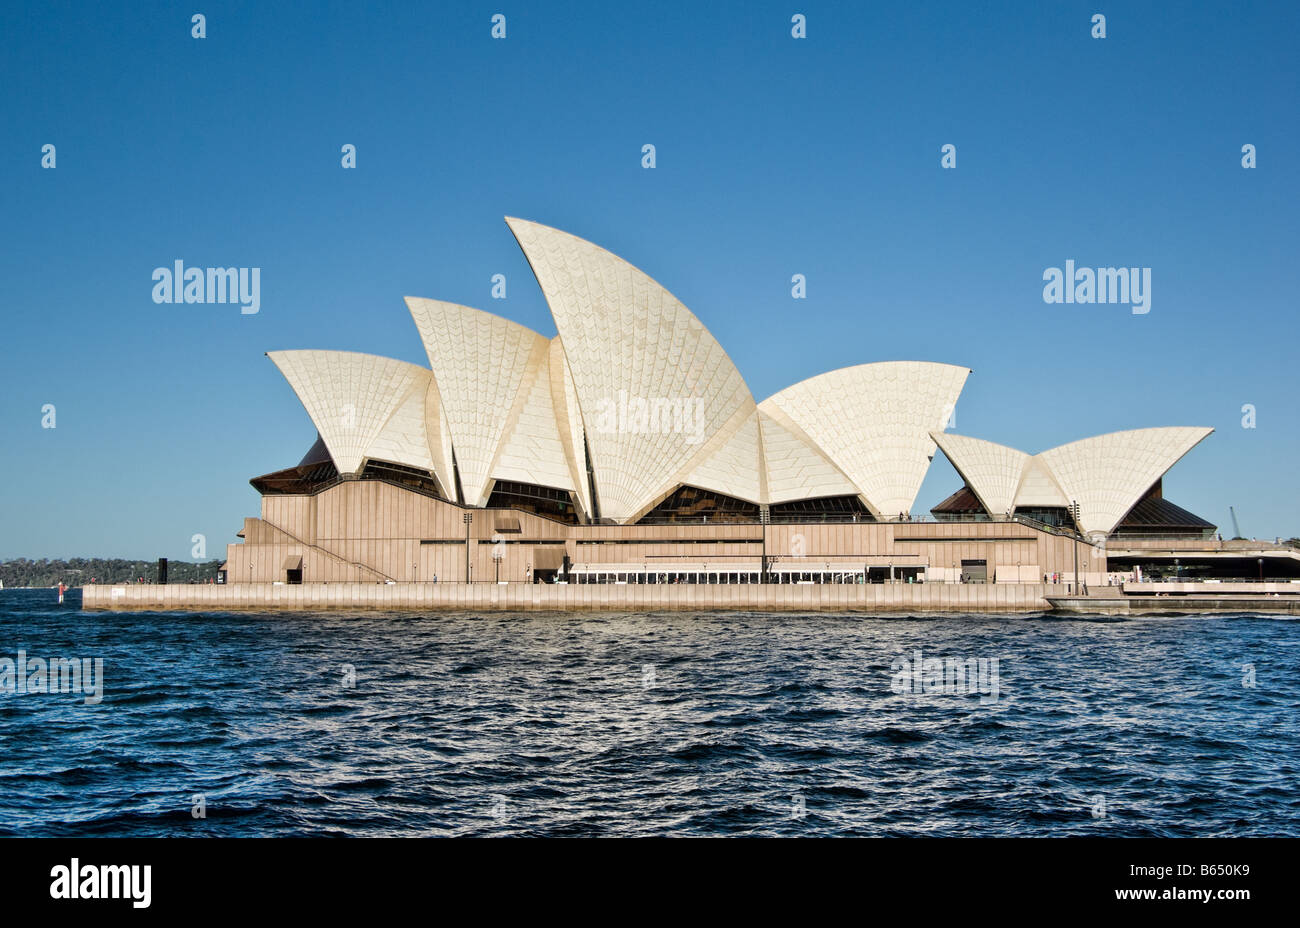 great image of australian icon the sydney opera house Stock Photo